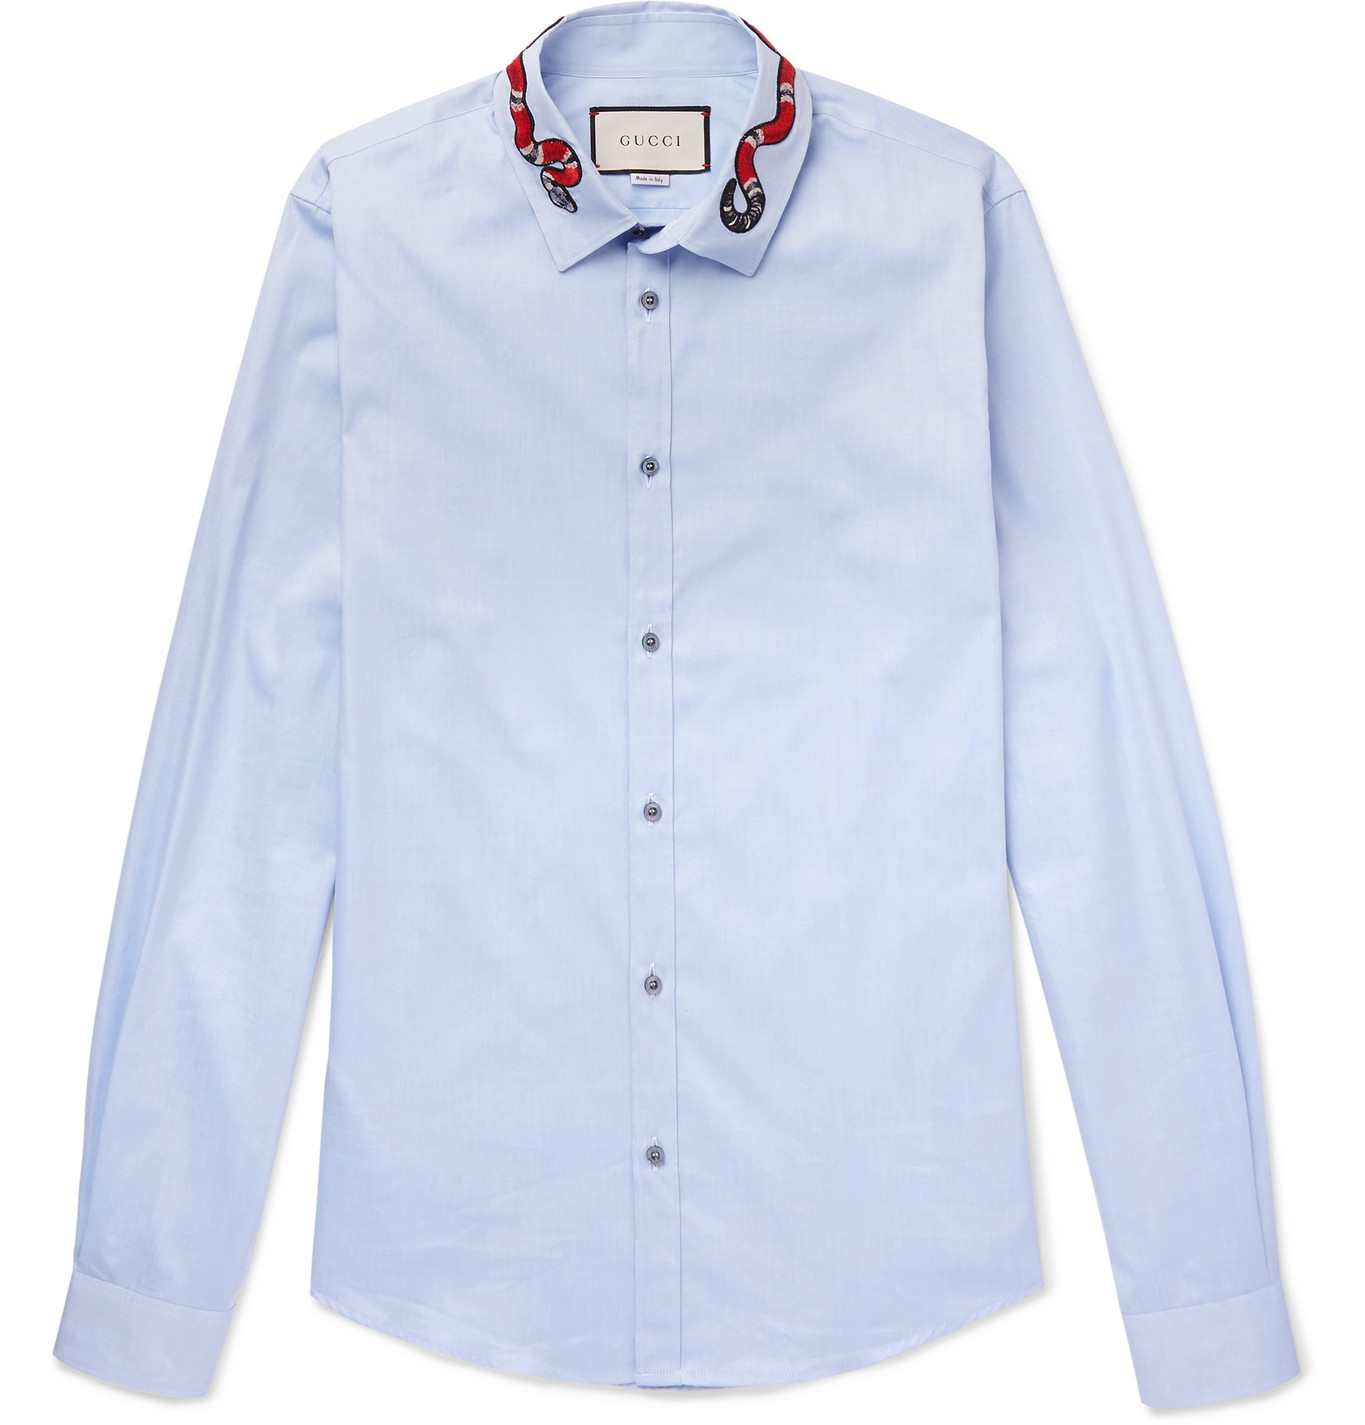 Gucci - Duke Appliquéd Cotton Oxford Shirt - Men - Blue | The Fashionisto